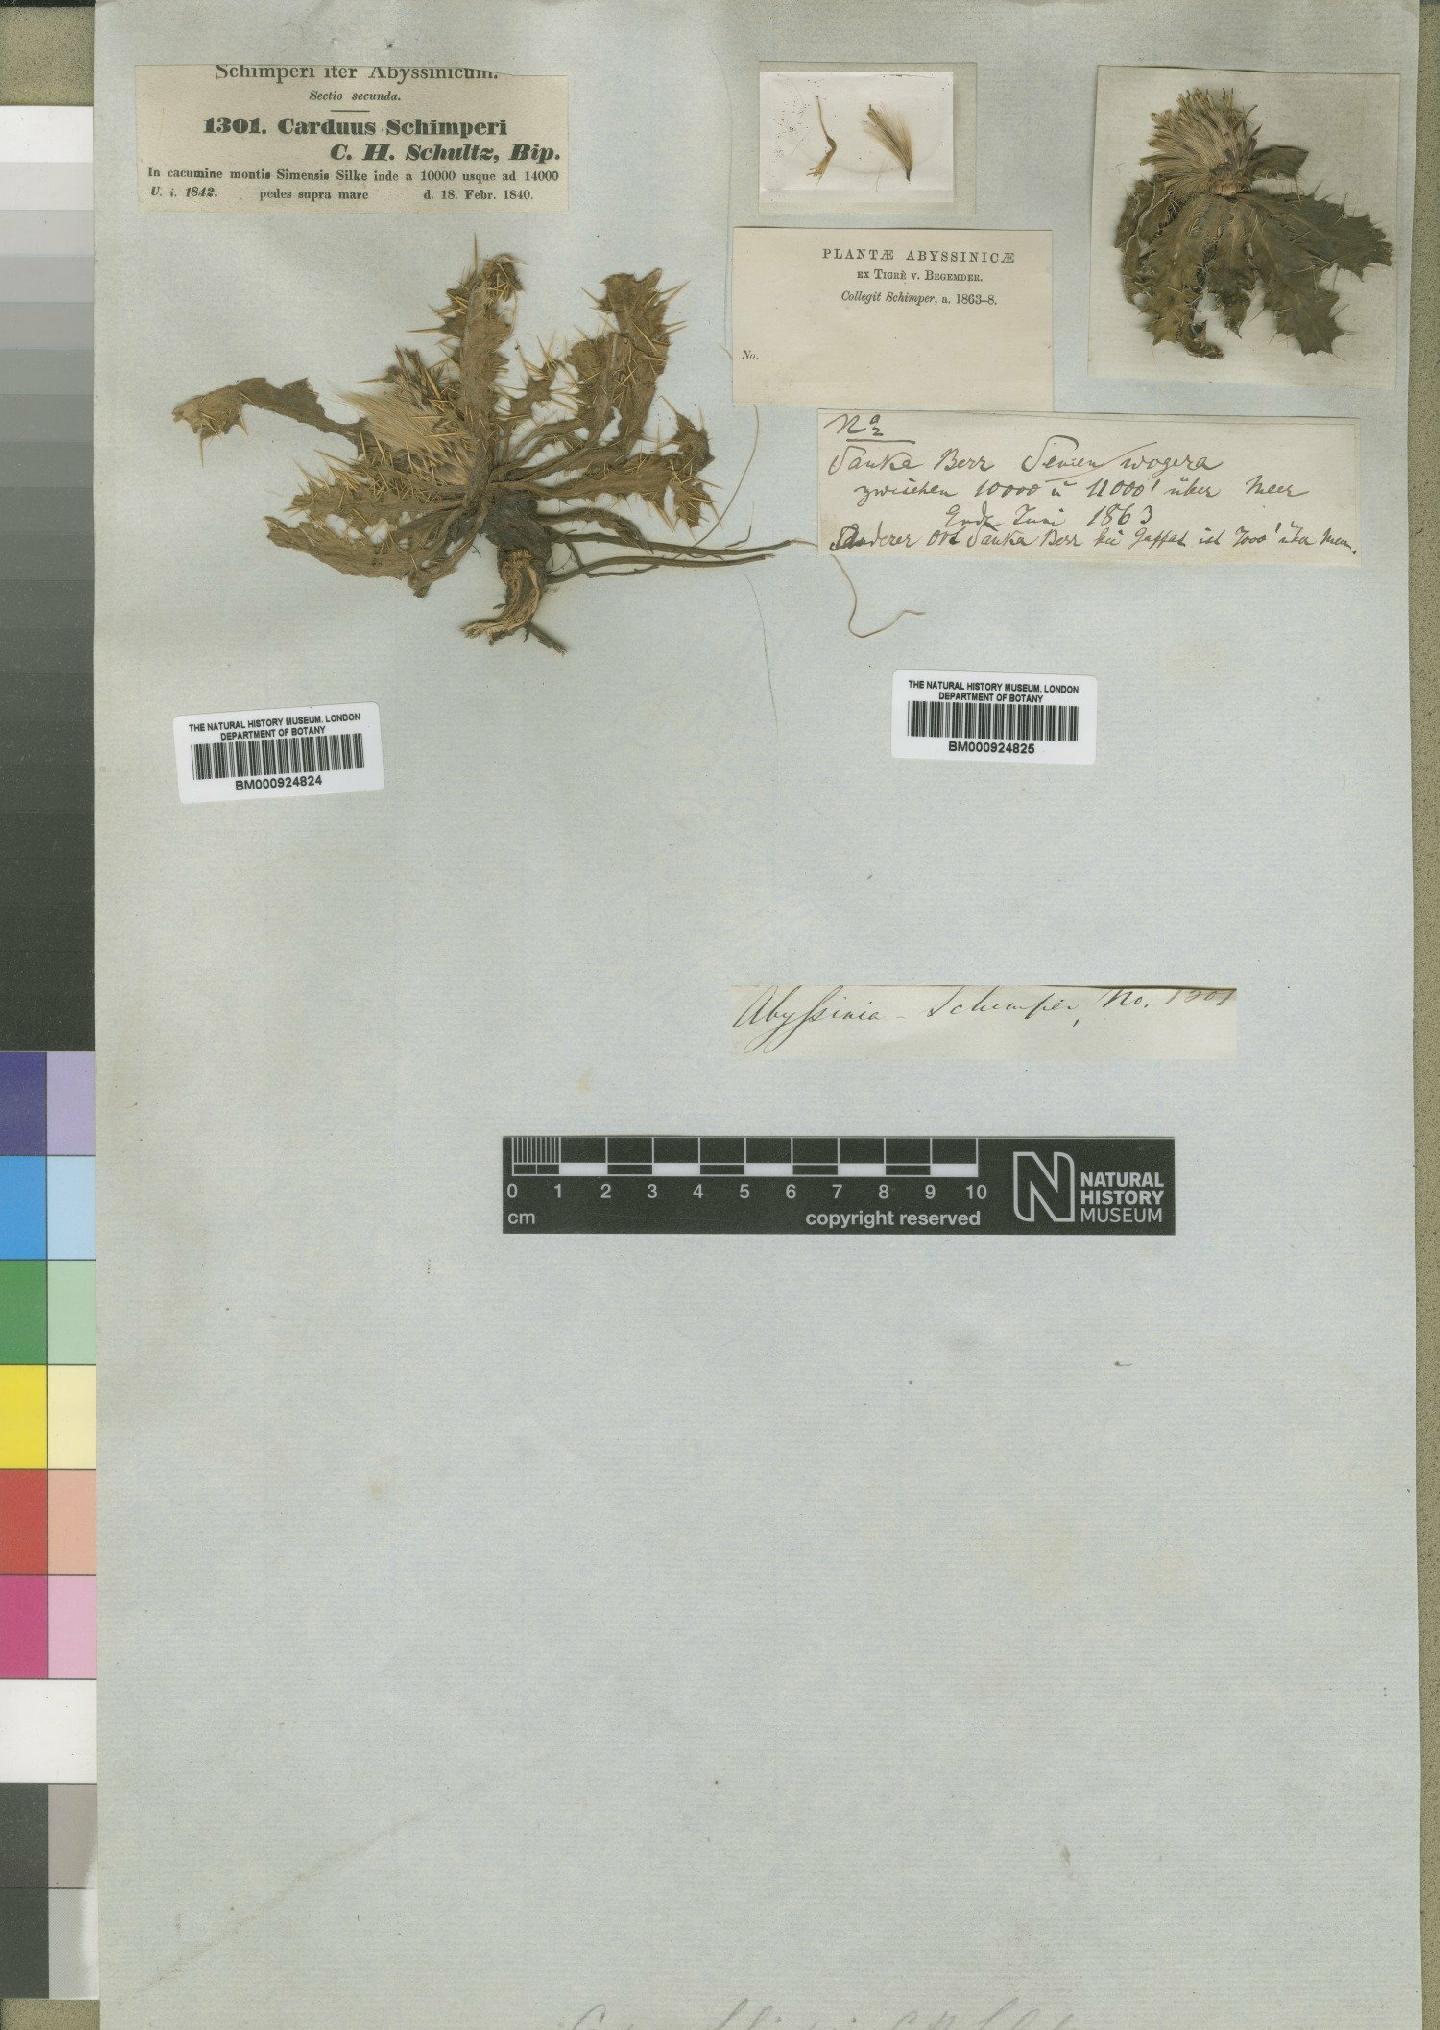 To NHMUK collection (Carduus schimperi Sch.Bip.; Type; NHMUK:ecatalogue:4553587)